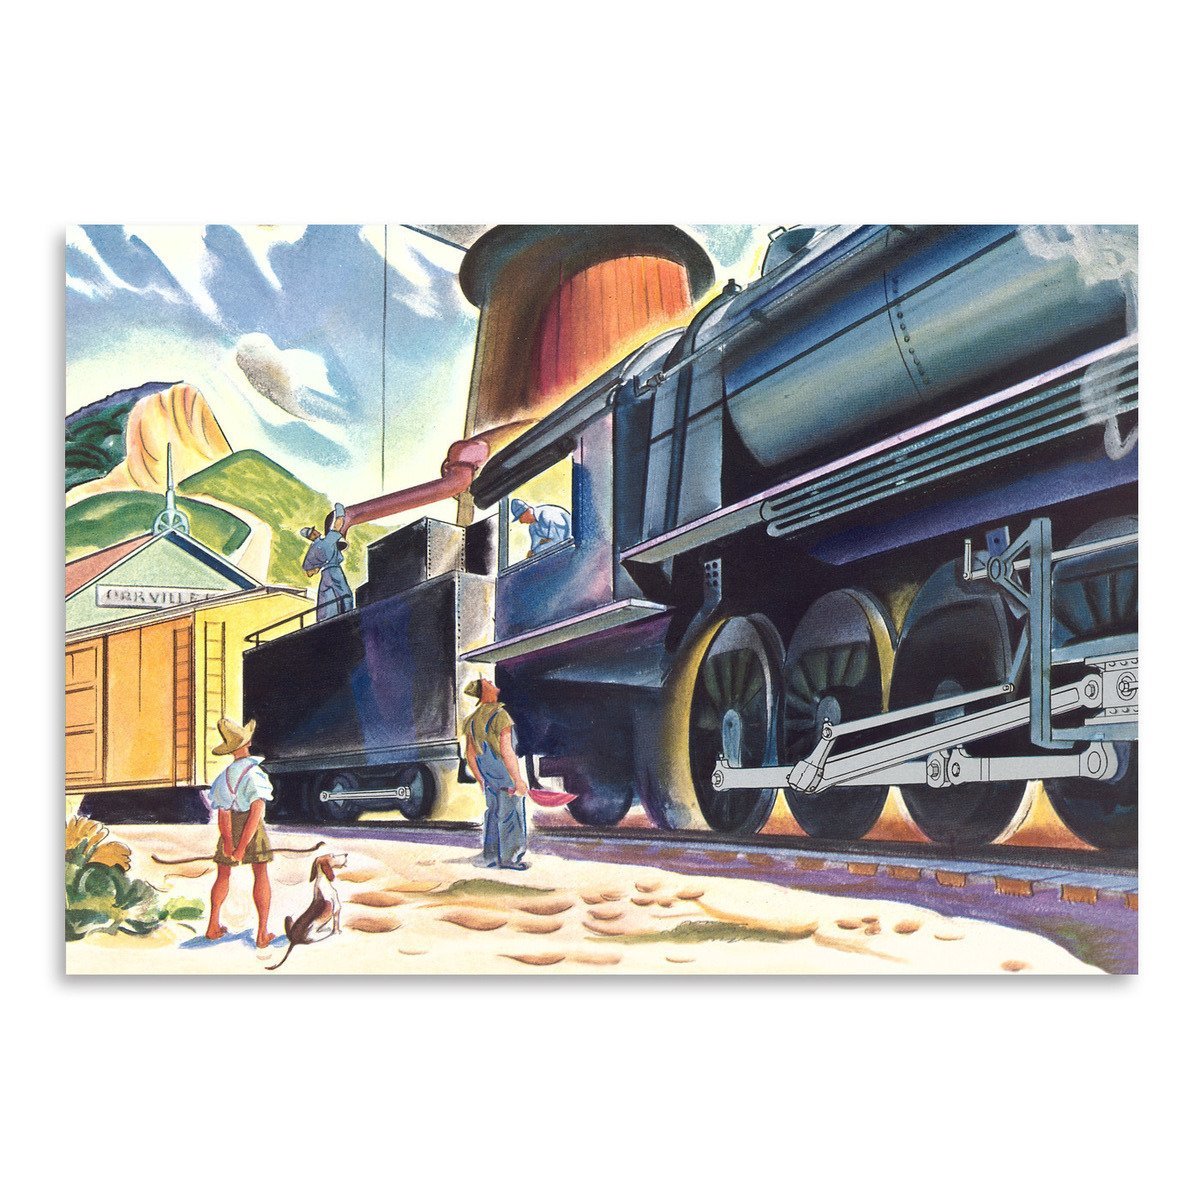 Big Old Train by Found Image Press Art Print - Art Print - Americanflat